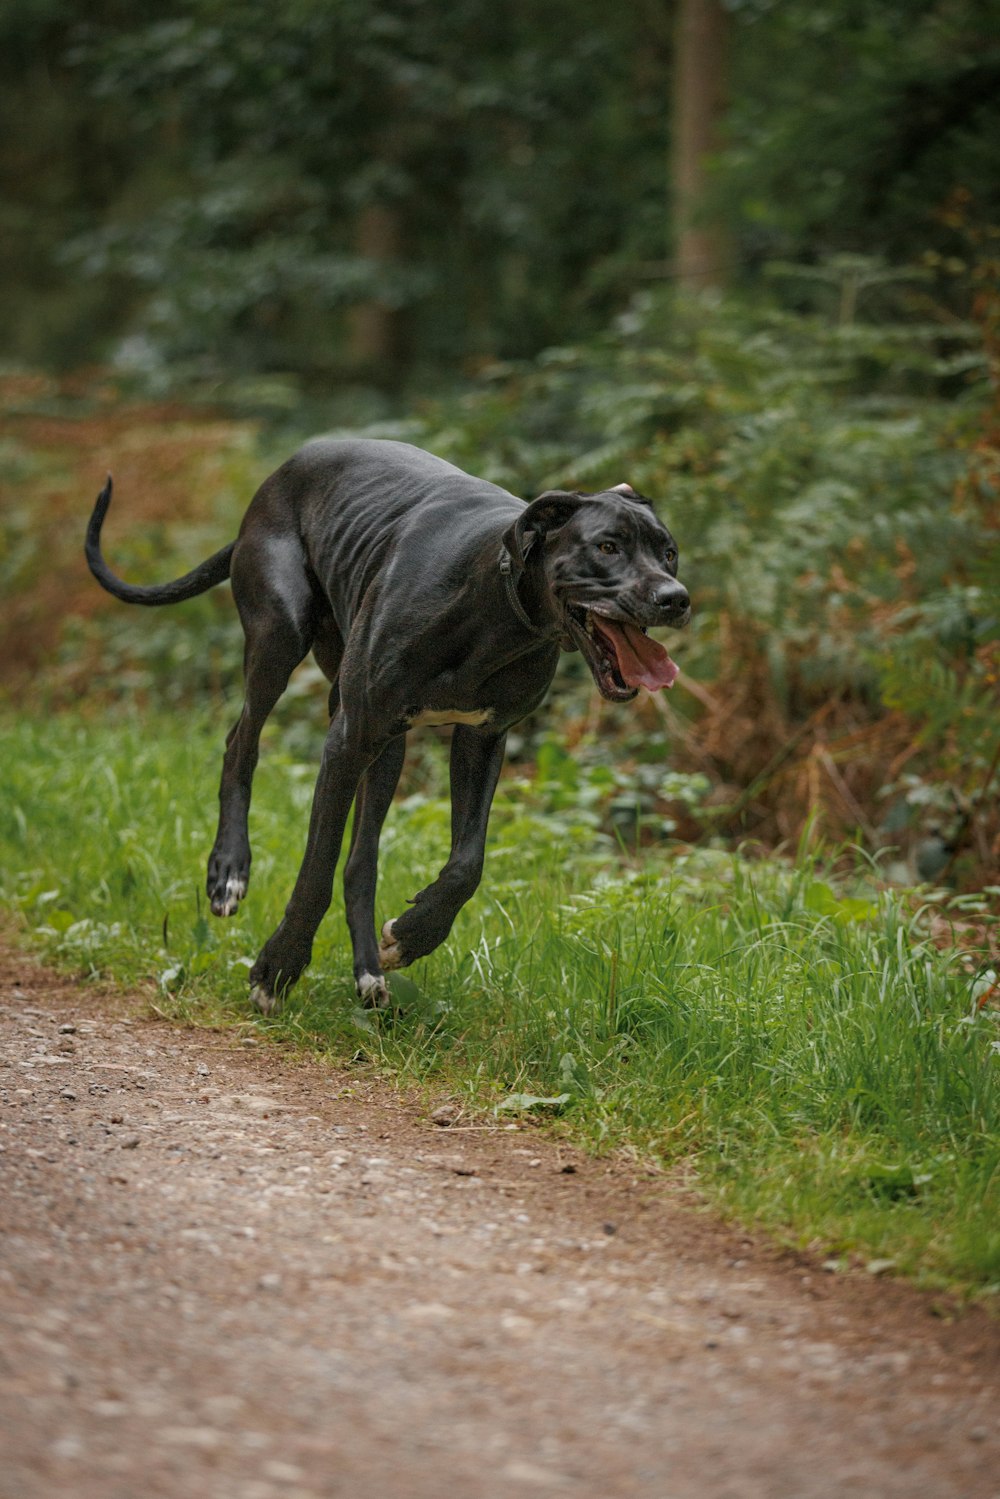 a black dog running down a dirt road